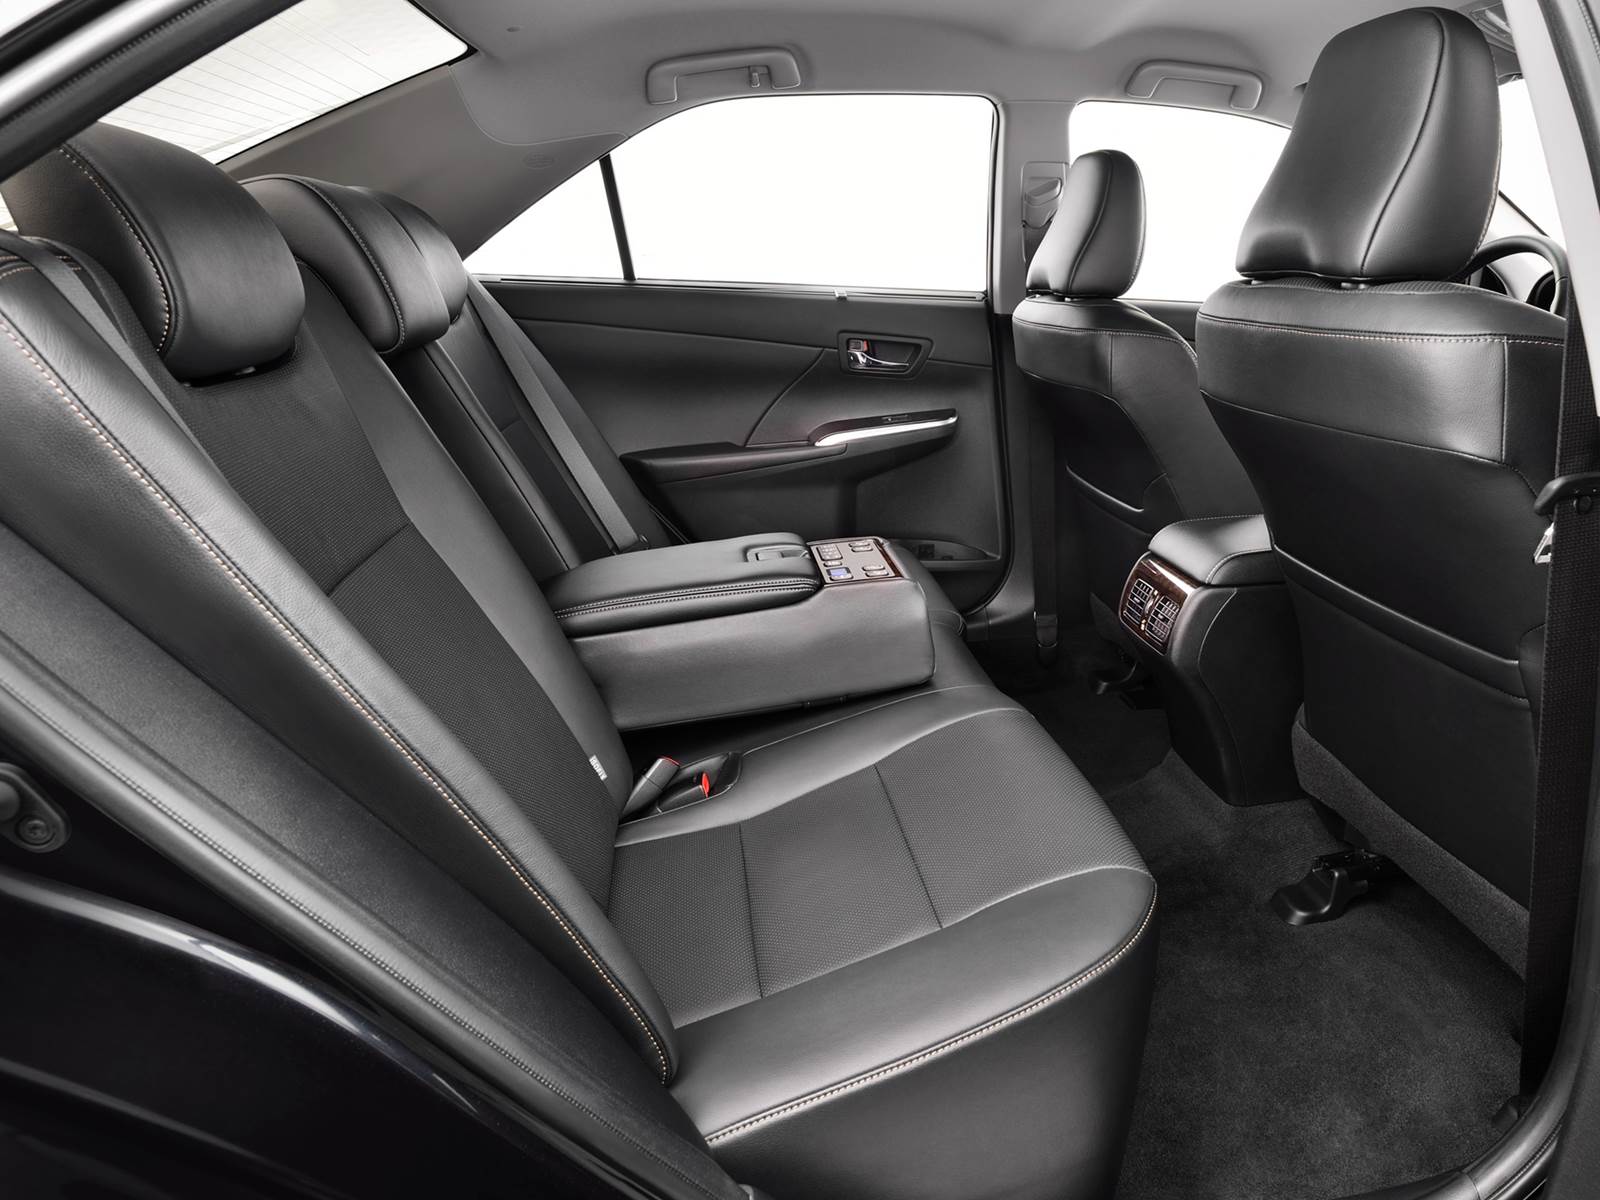 Toyota Camry 2015 - interior